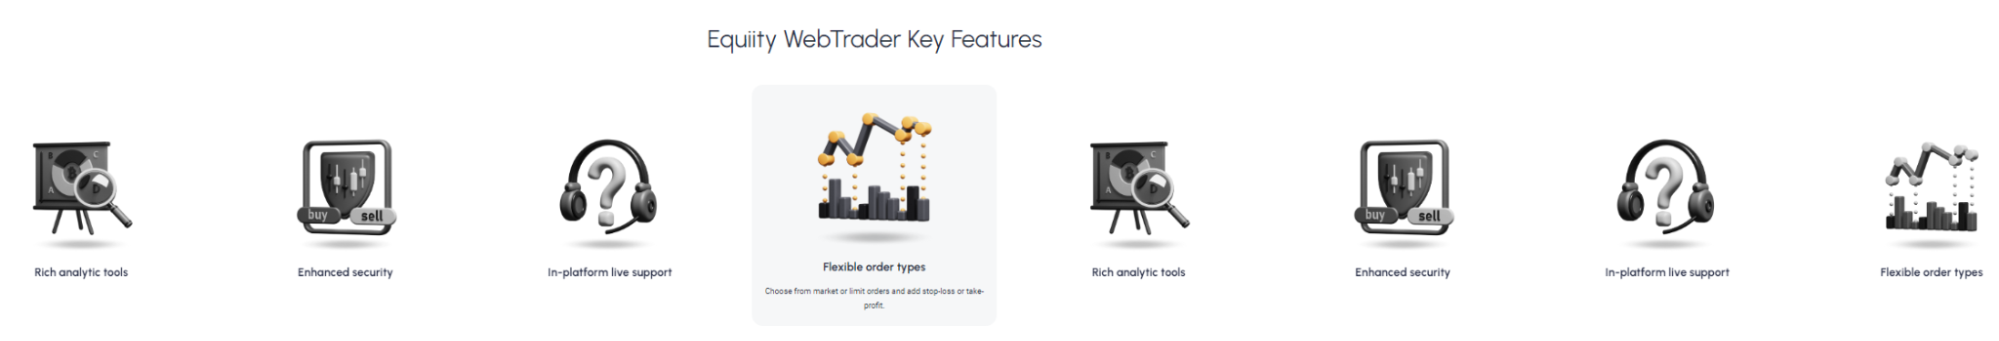 equiity broker Trading Platforms